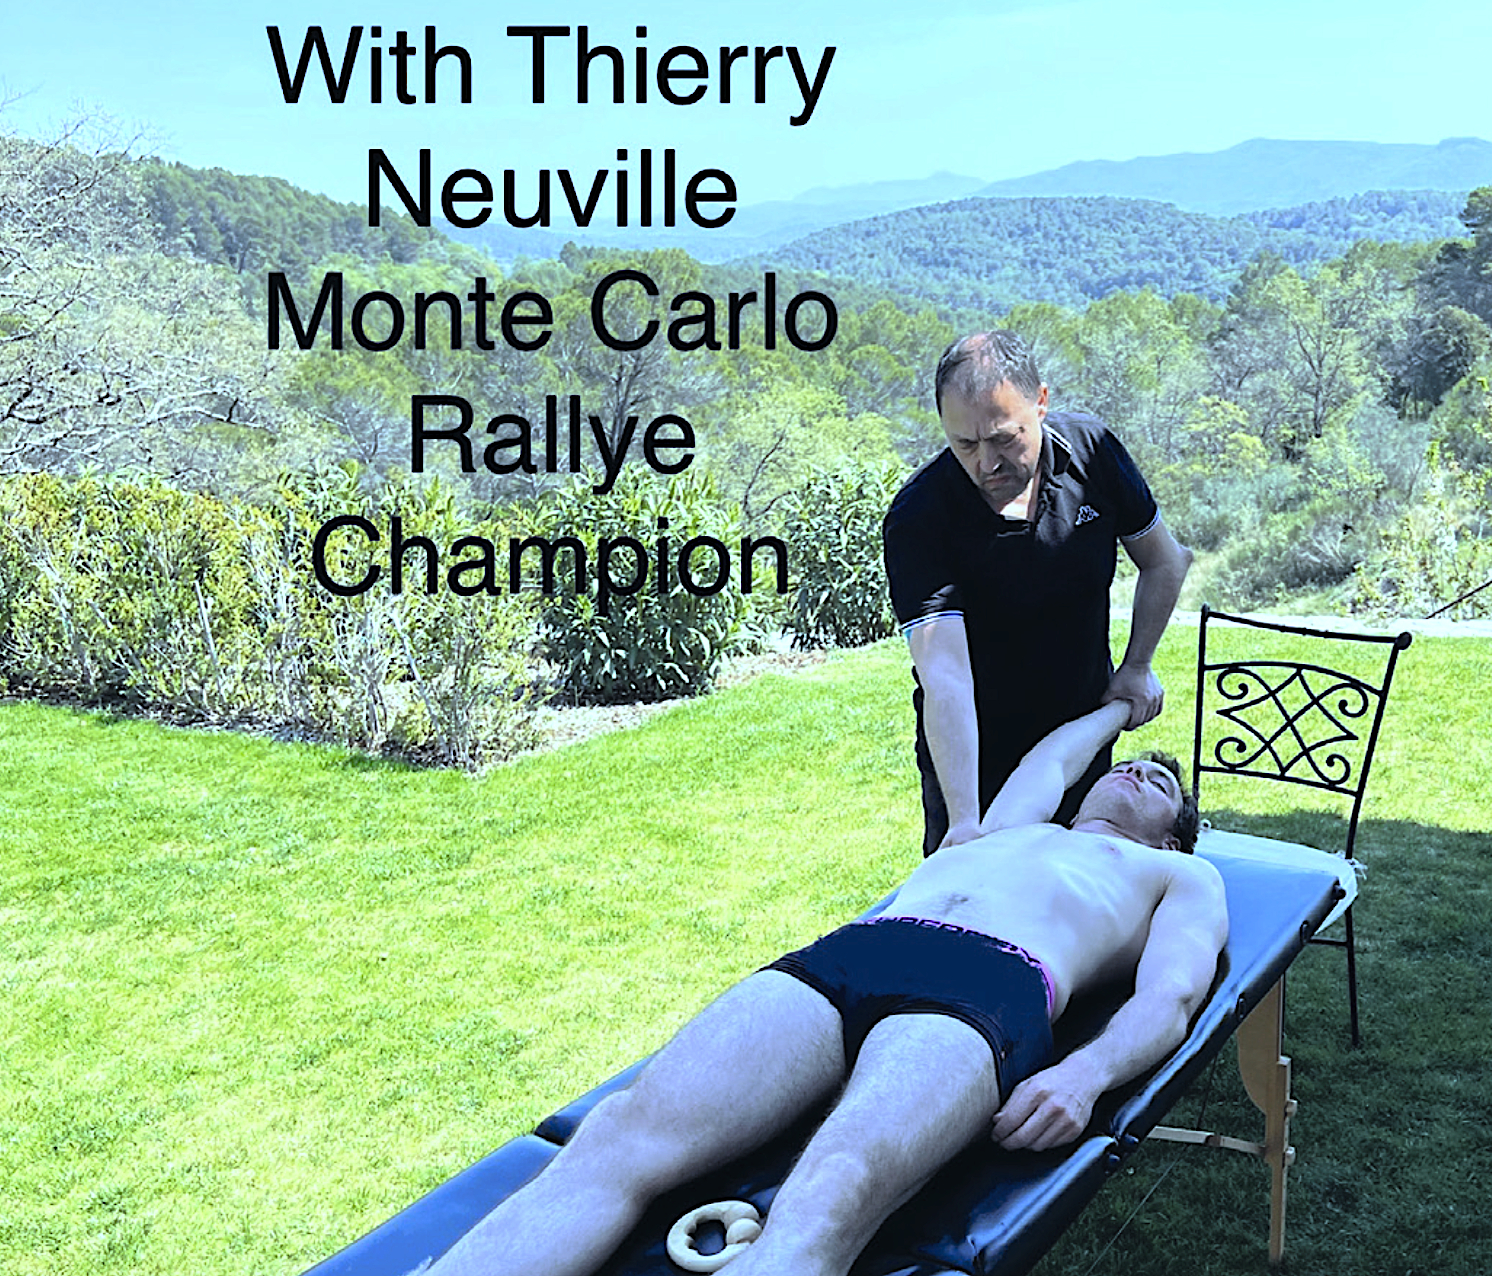 Massage Mobile Riviera - новый концепт представляет мастер массажа ЕС квалификации Роман Кодряну